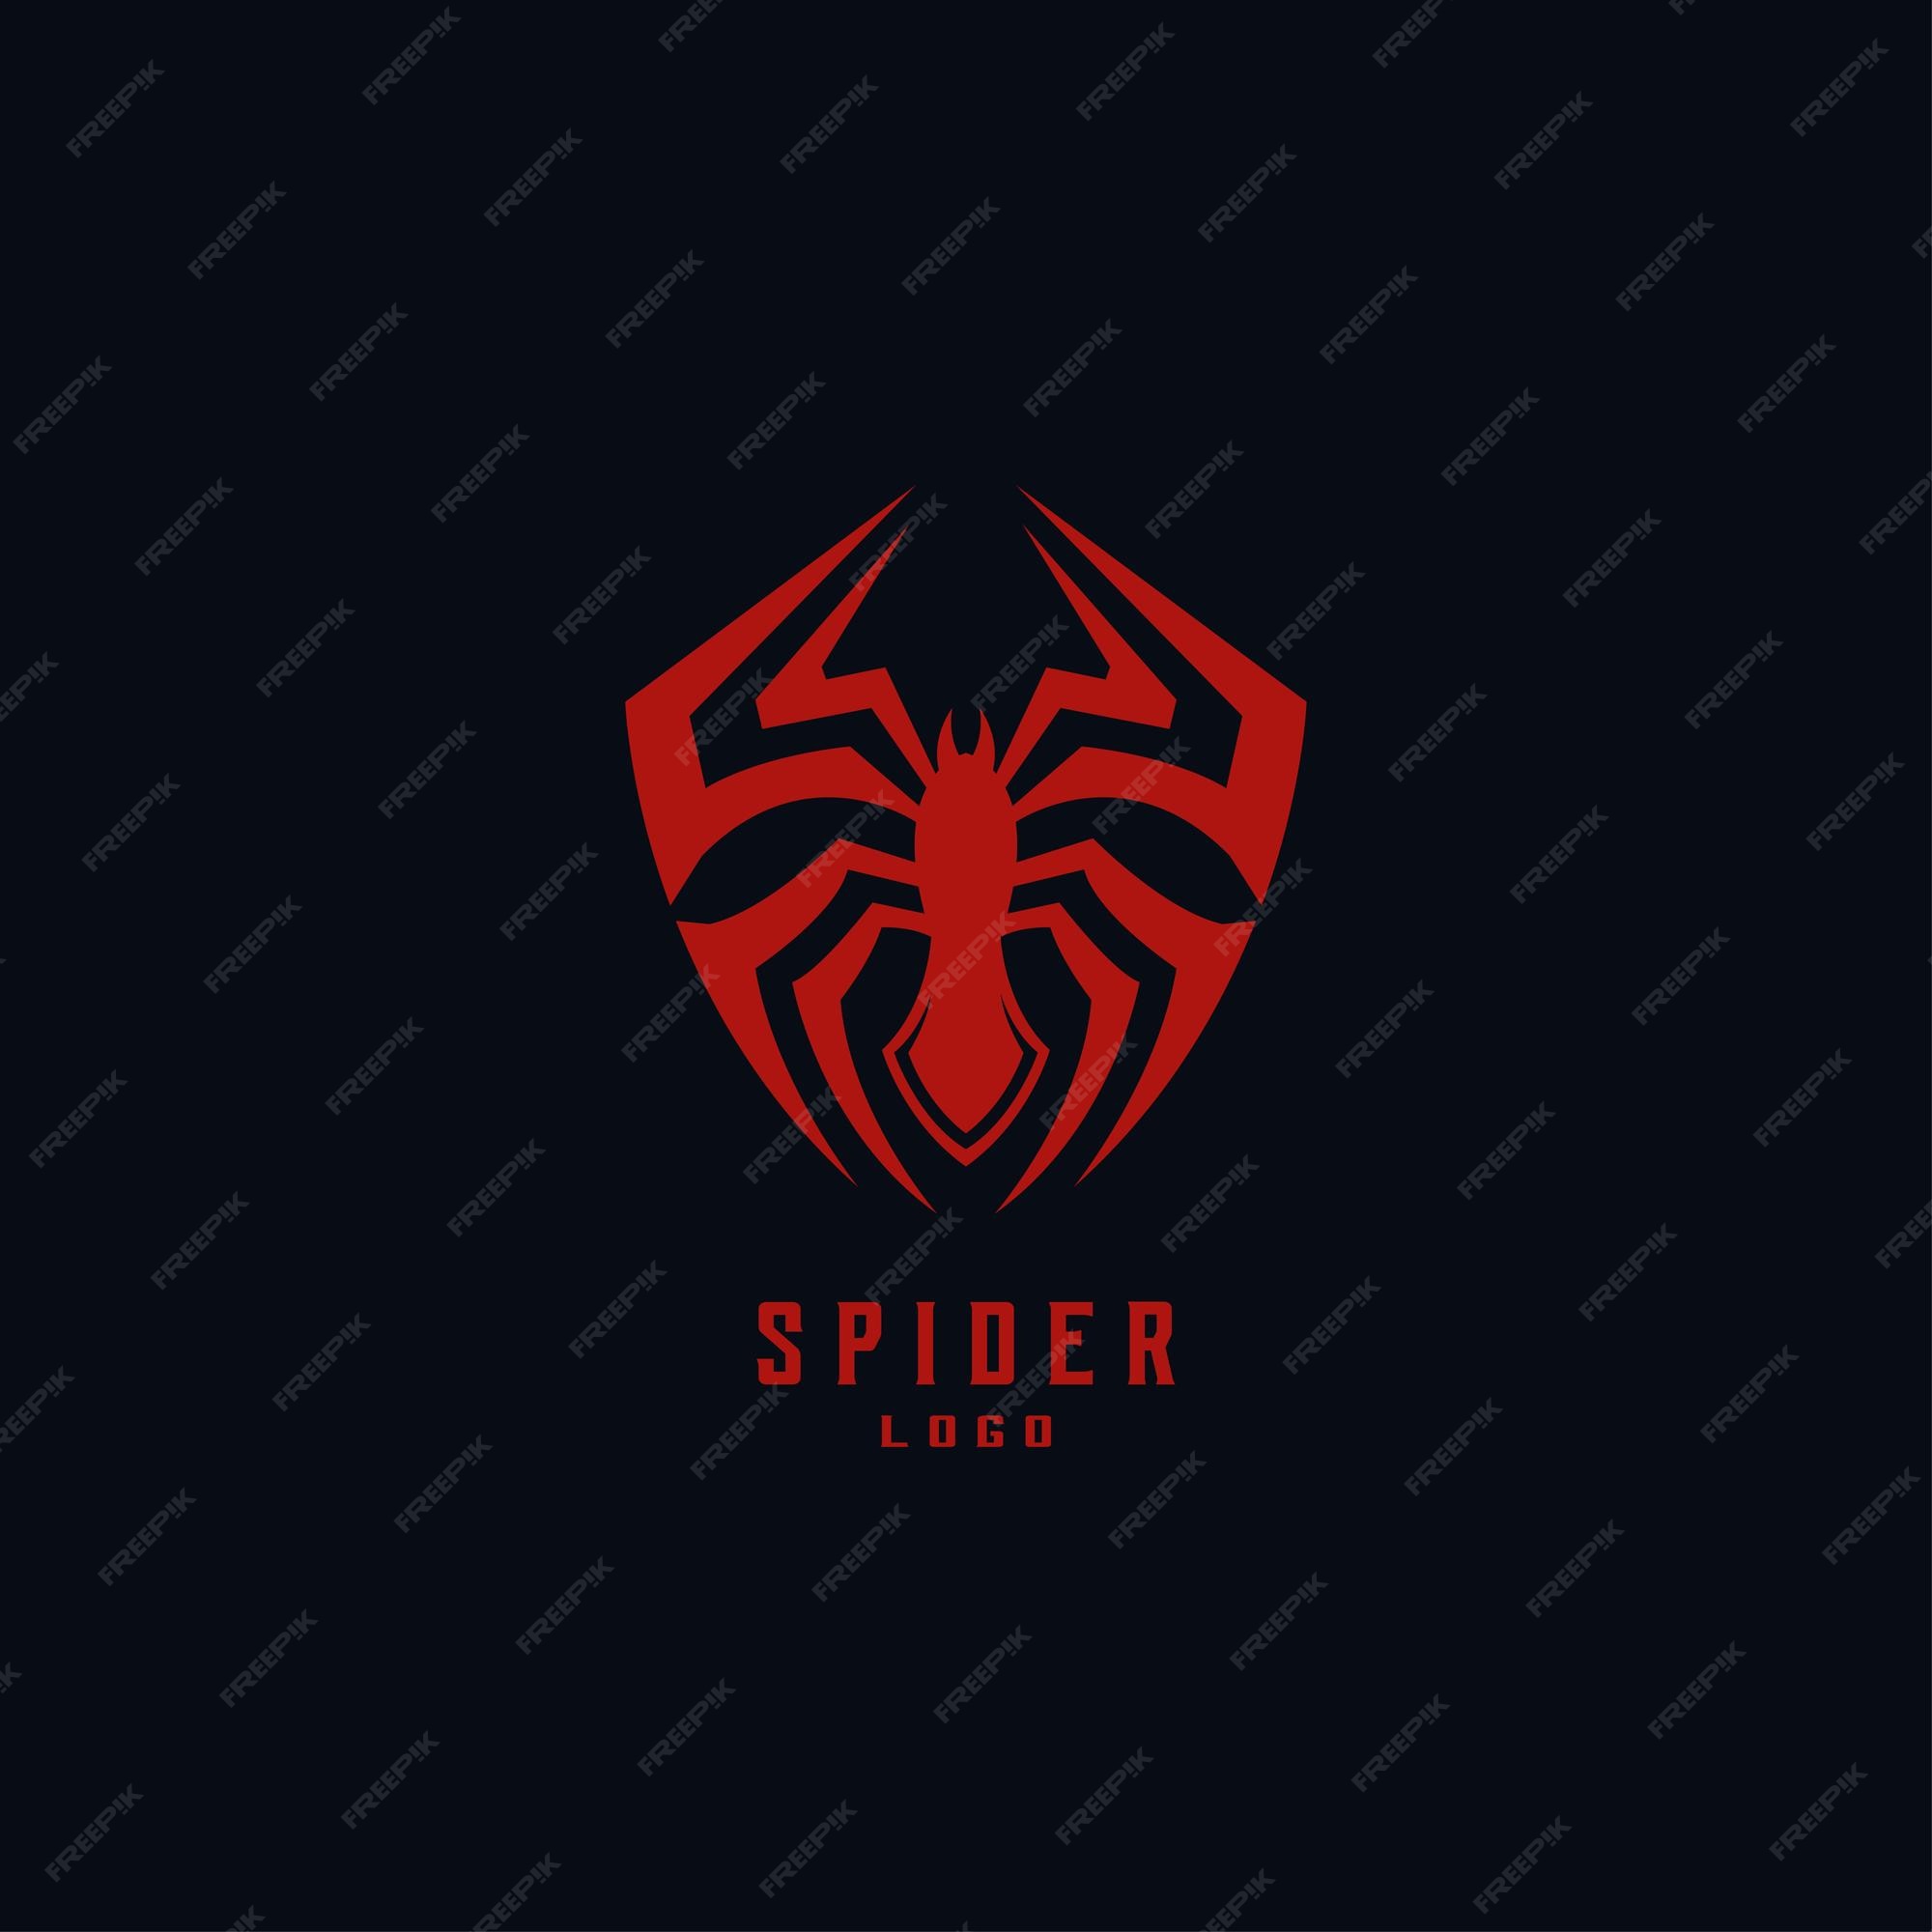 Premium Vector | Spider man icon logo design with shield vector inspiration